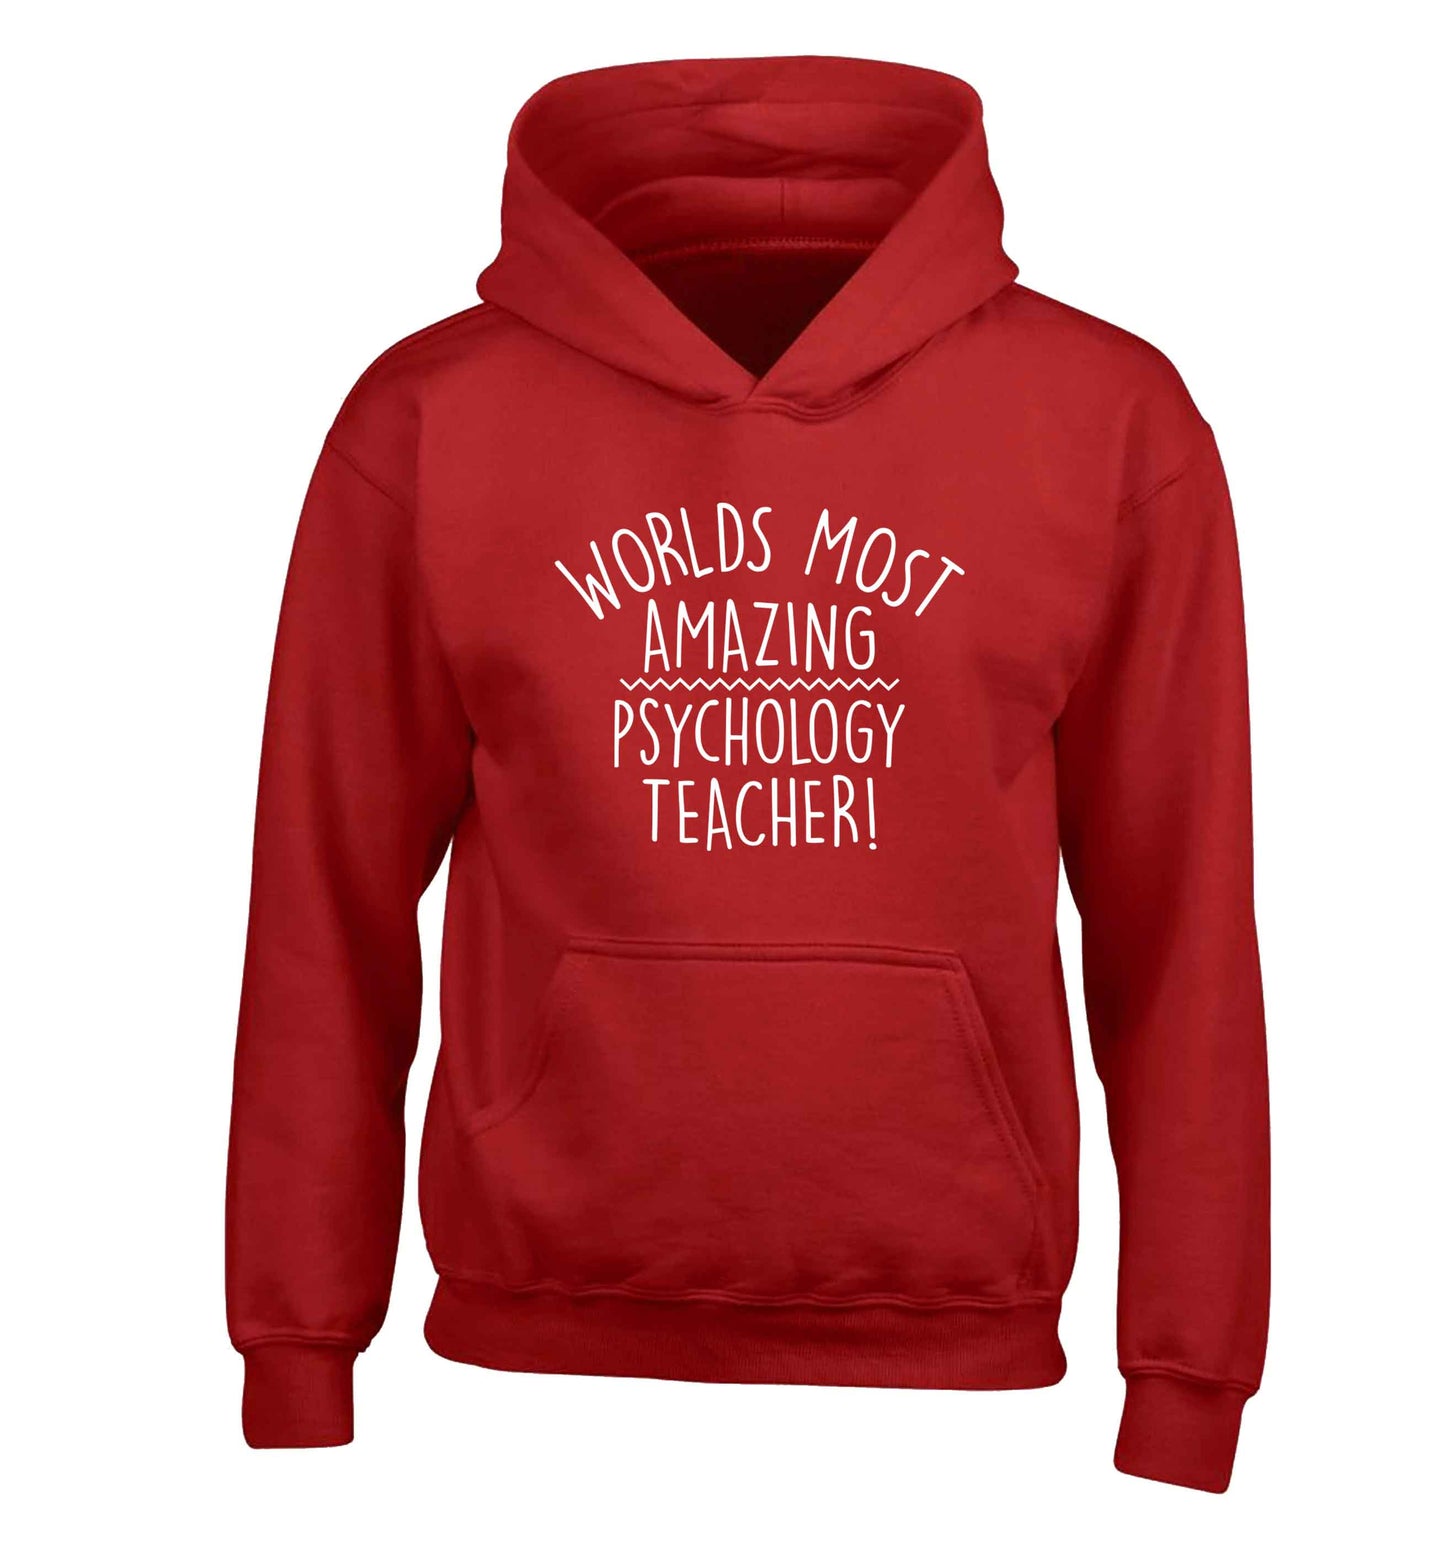 Worlds most amazing psychology teacher children's red hoodie 12-13 Years